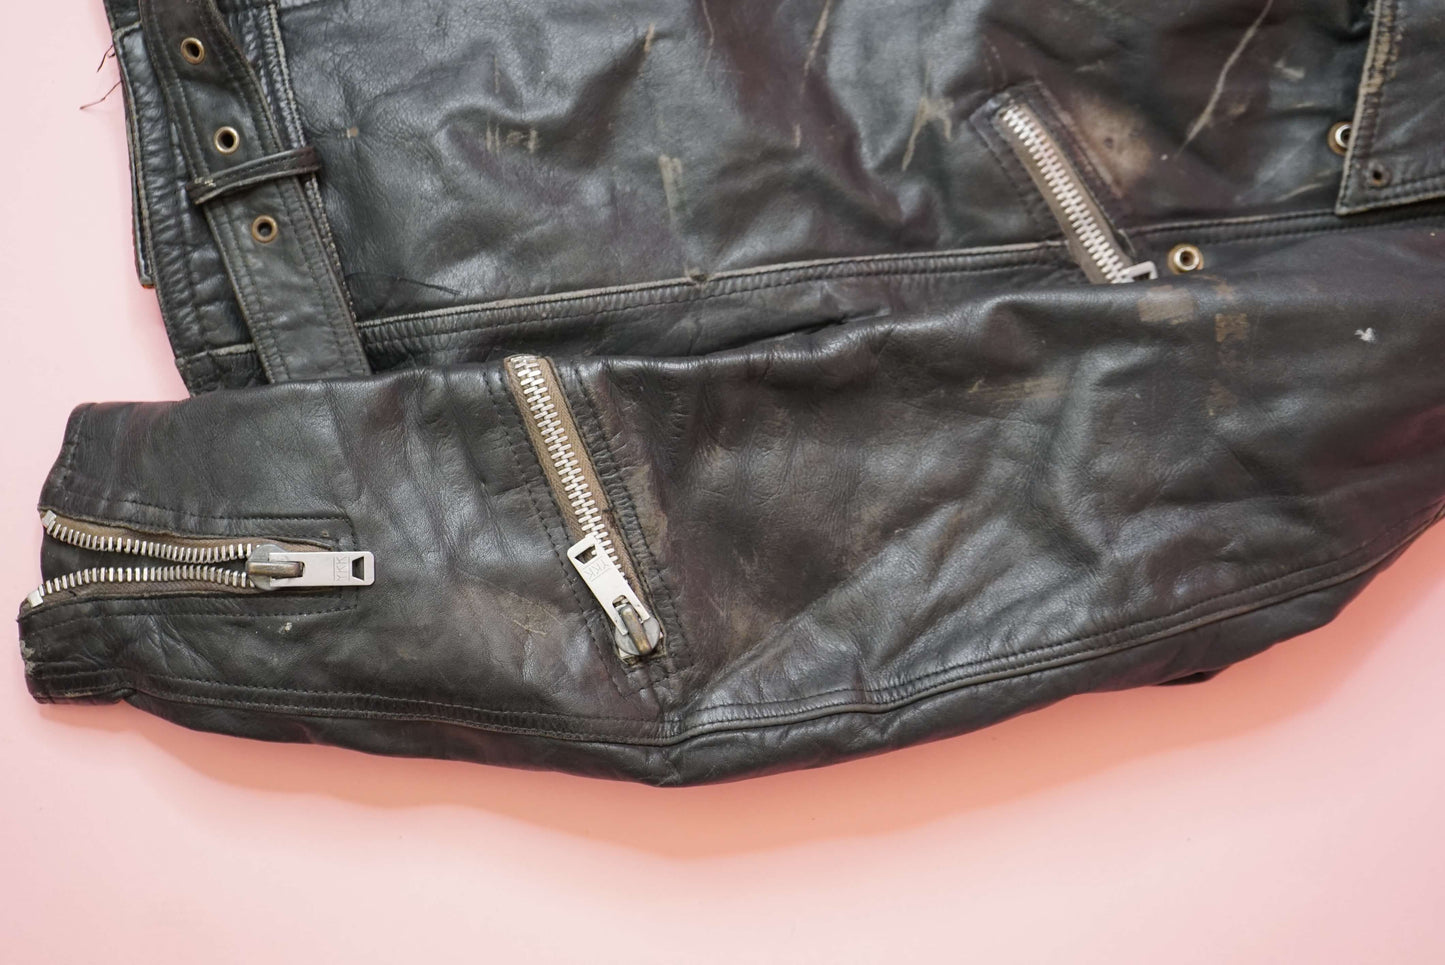 Black Faded Distressed Leather Biker Jacket Vintage Aged Leather Size L